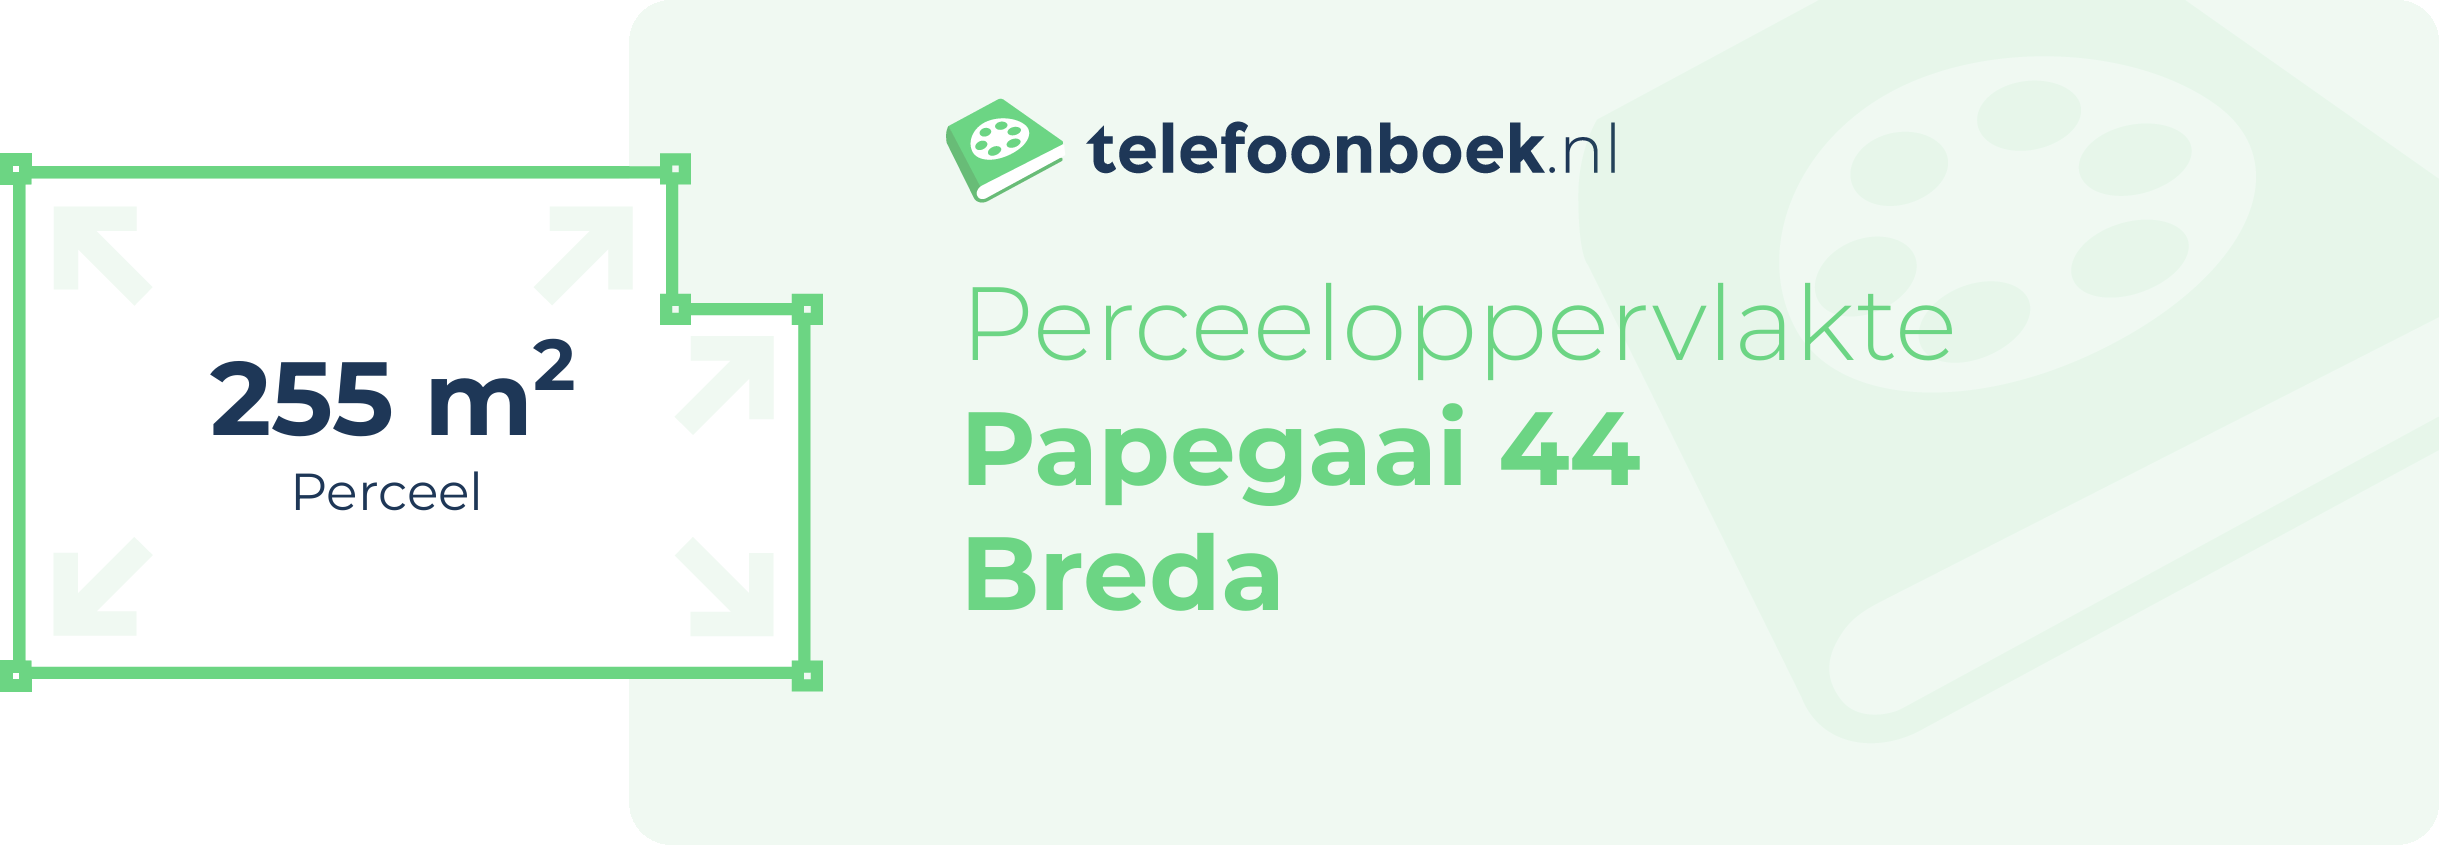 Perceeloppervlakte Papegaai 44 Breda